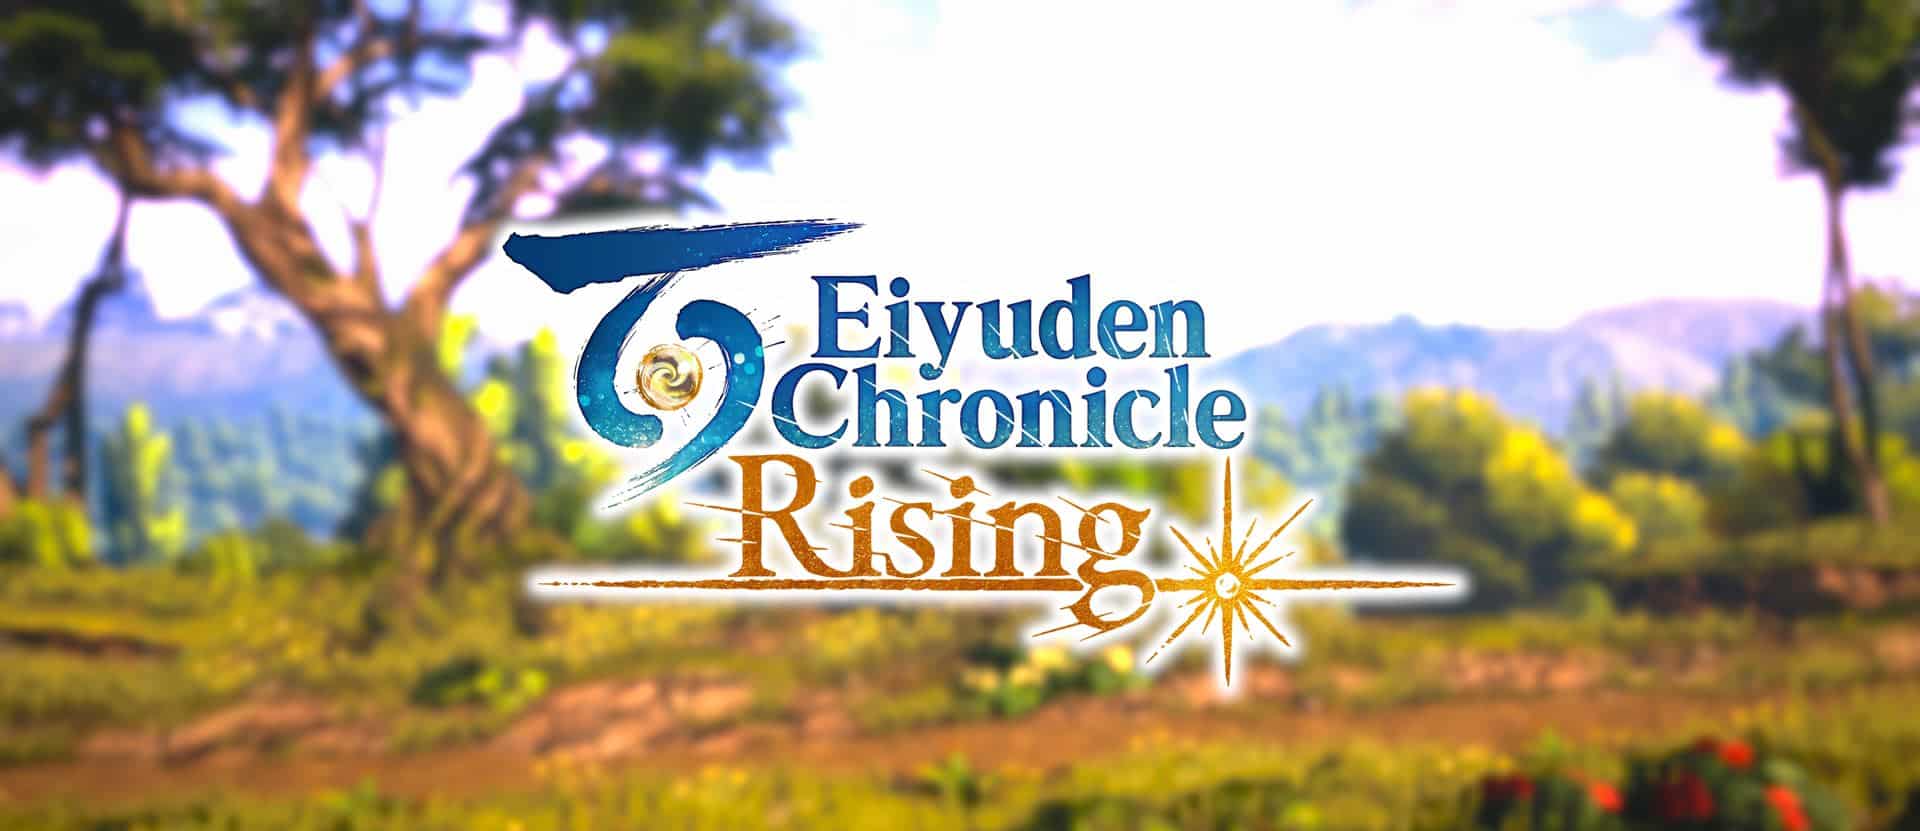 Eiyuden Chronicle: Rising title